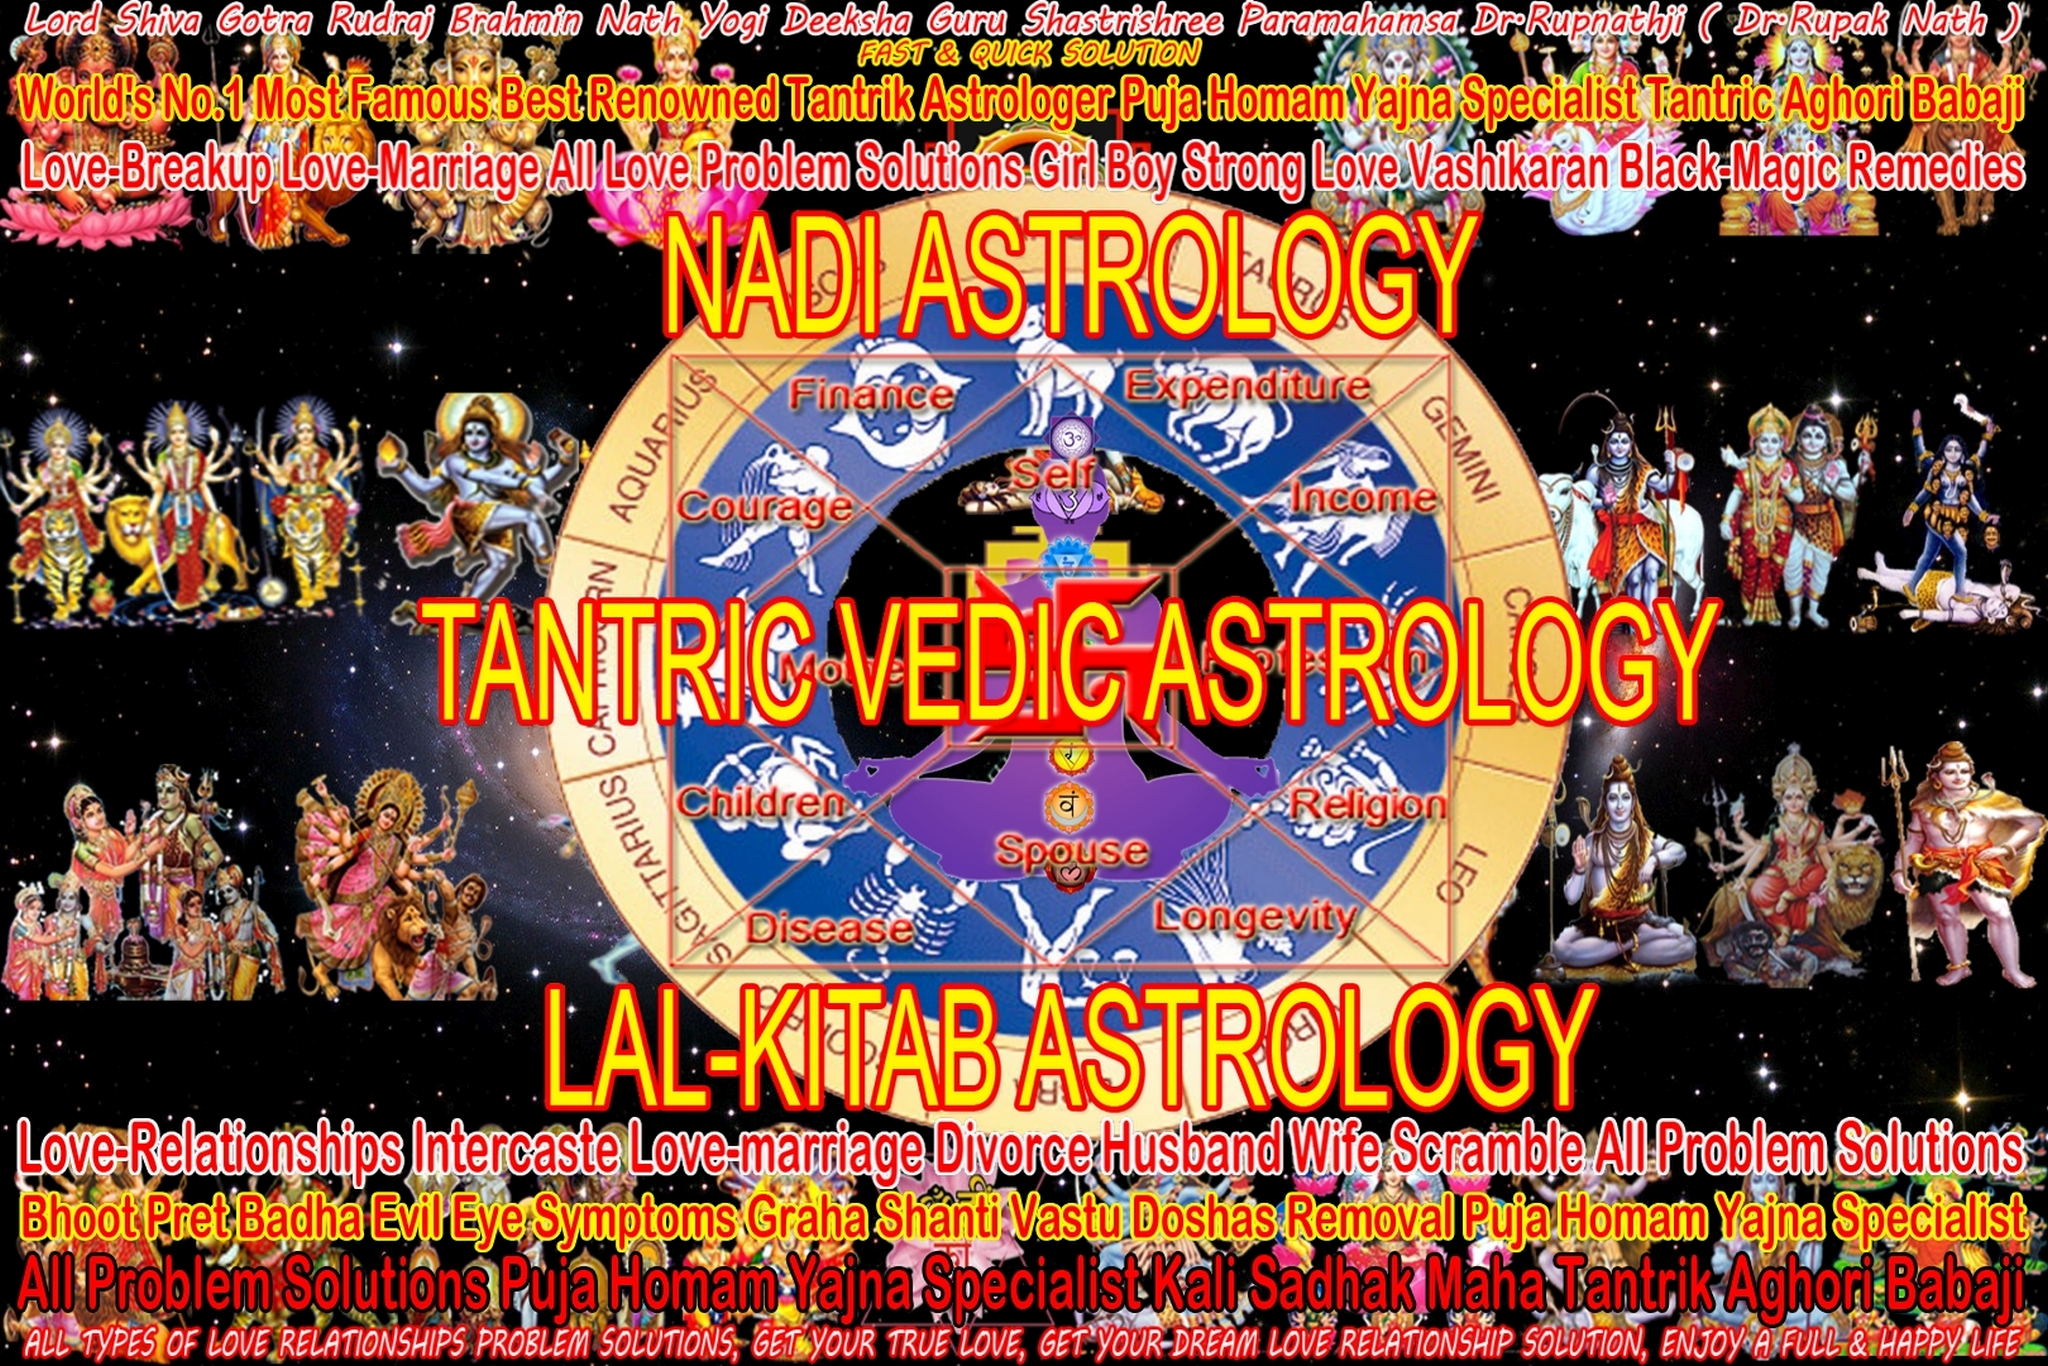 vedic astrology predictions